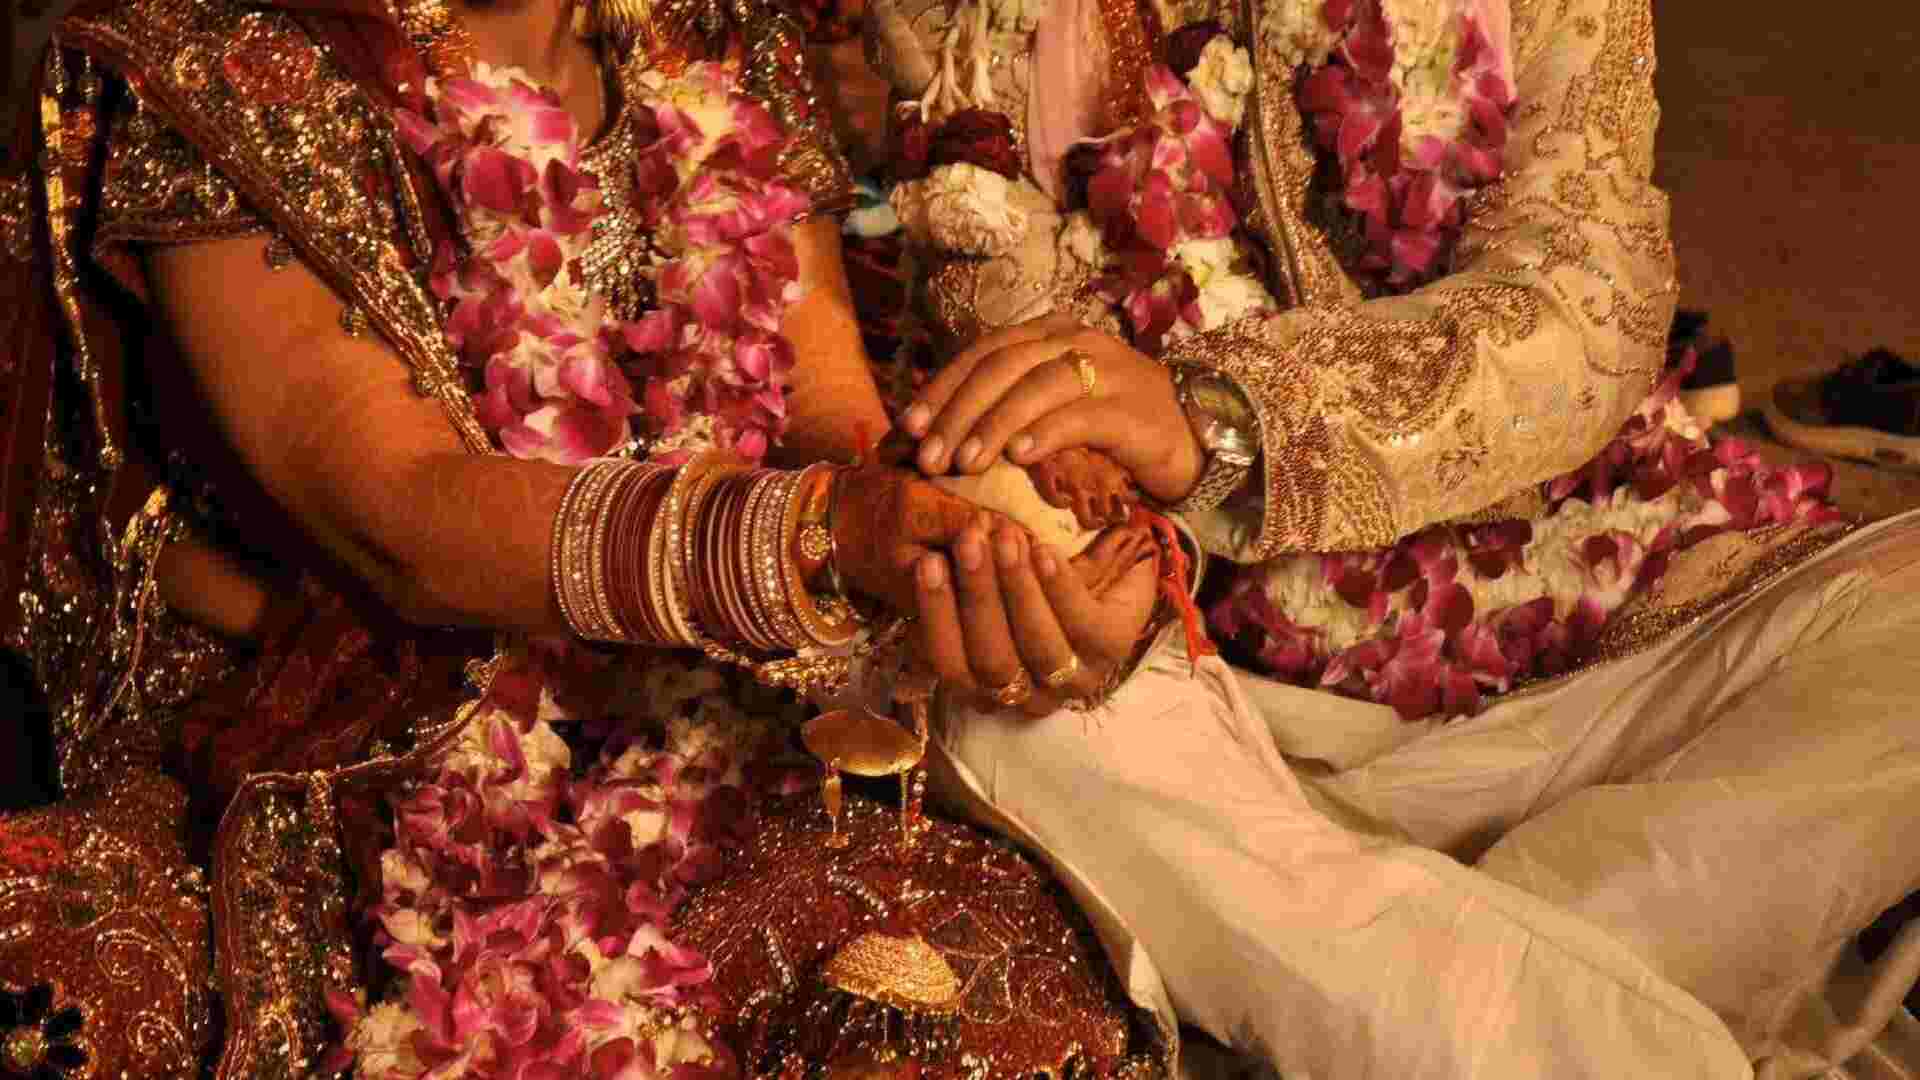 Bride-Groom Kiss During ‘Jai Mala’ Ceremony Triggers Brawl